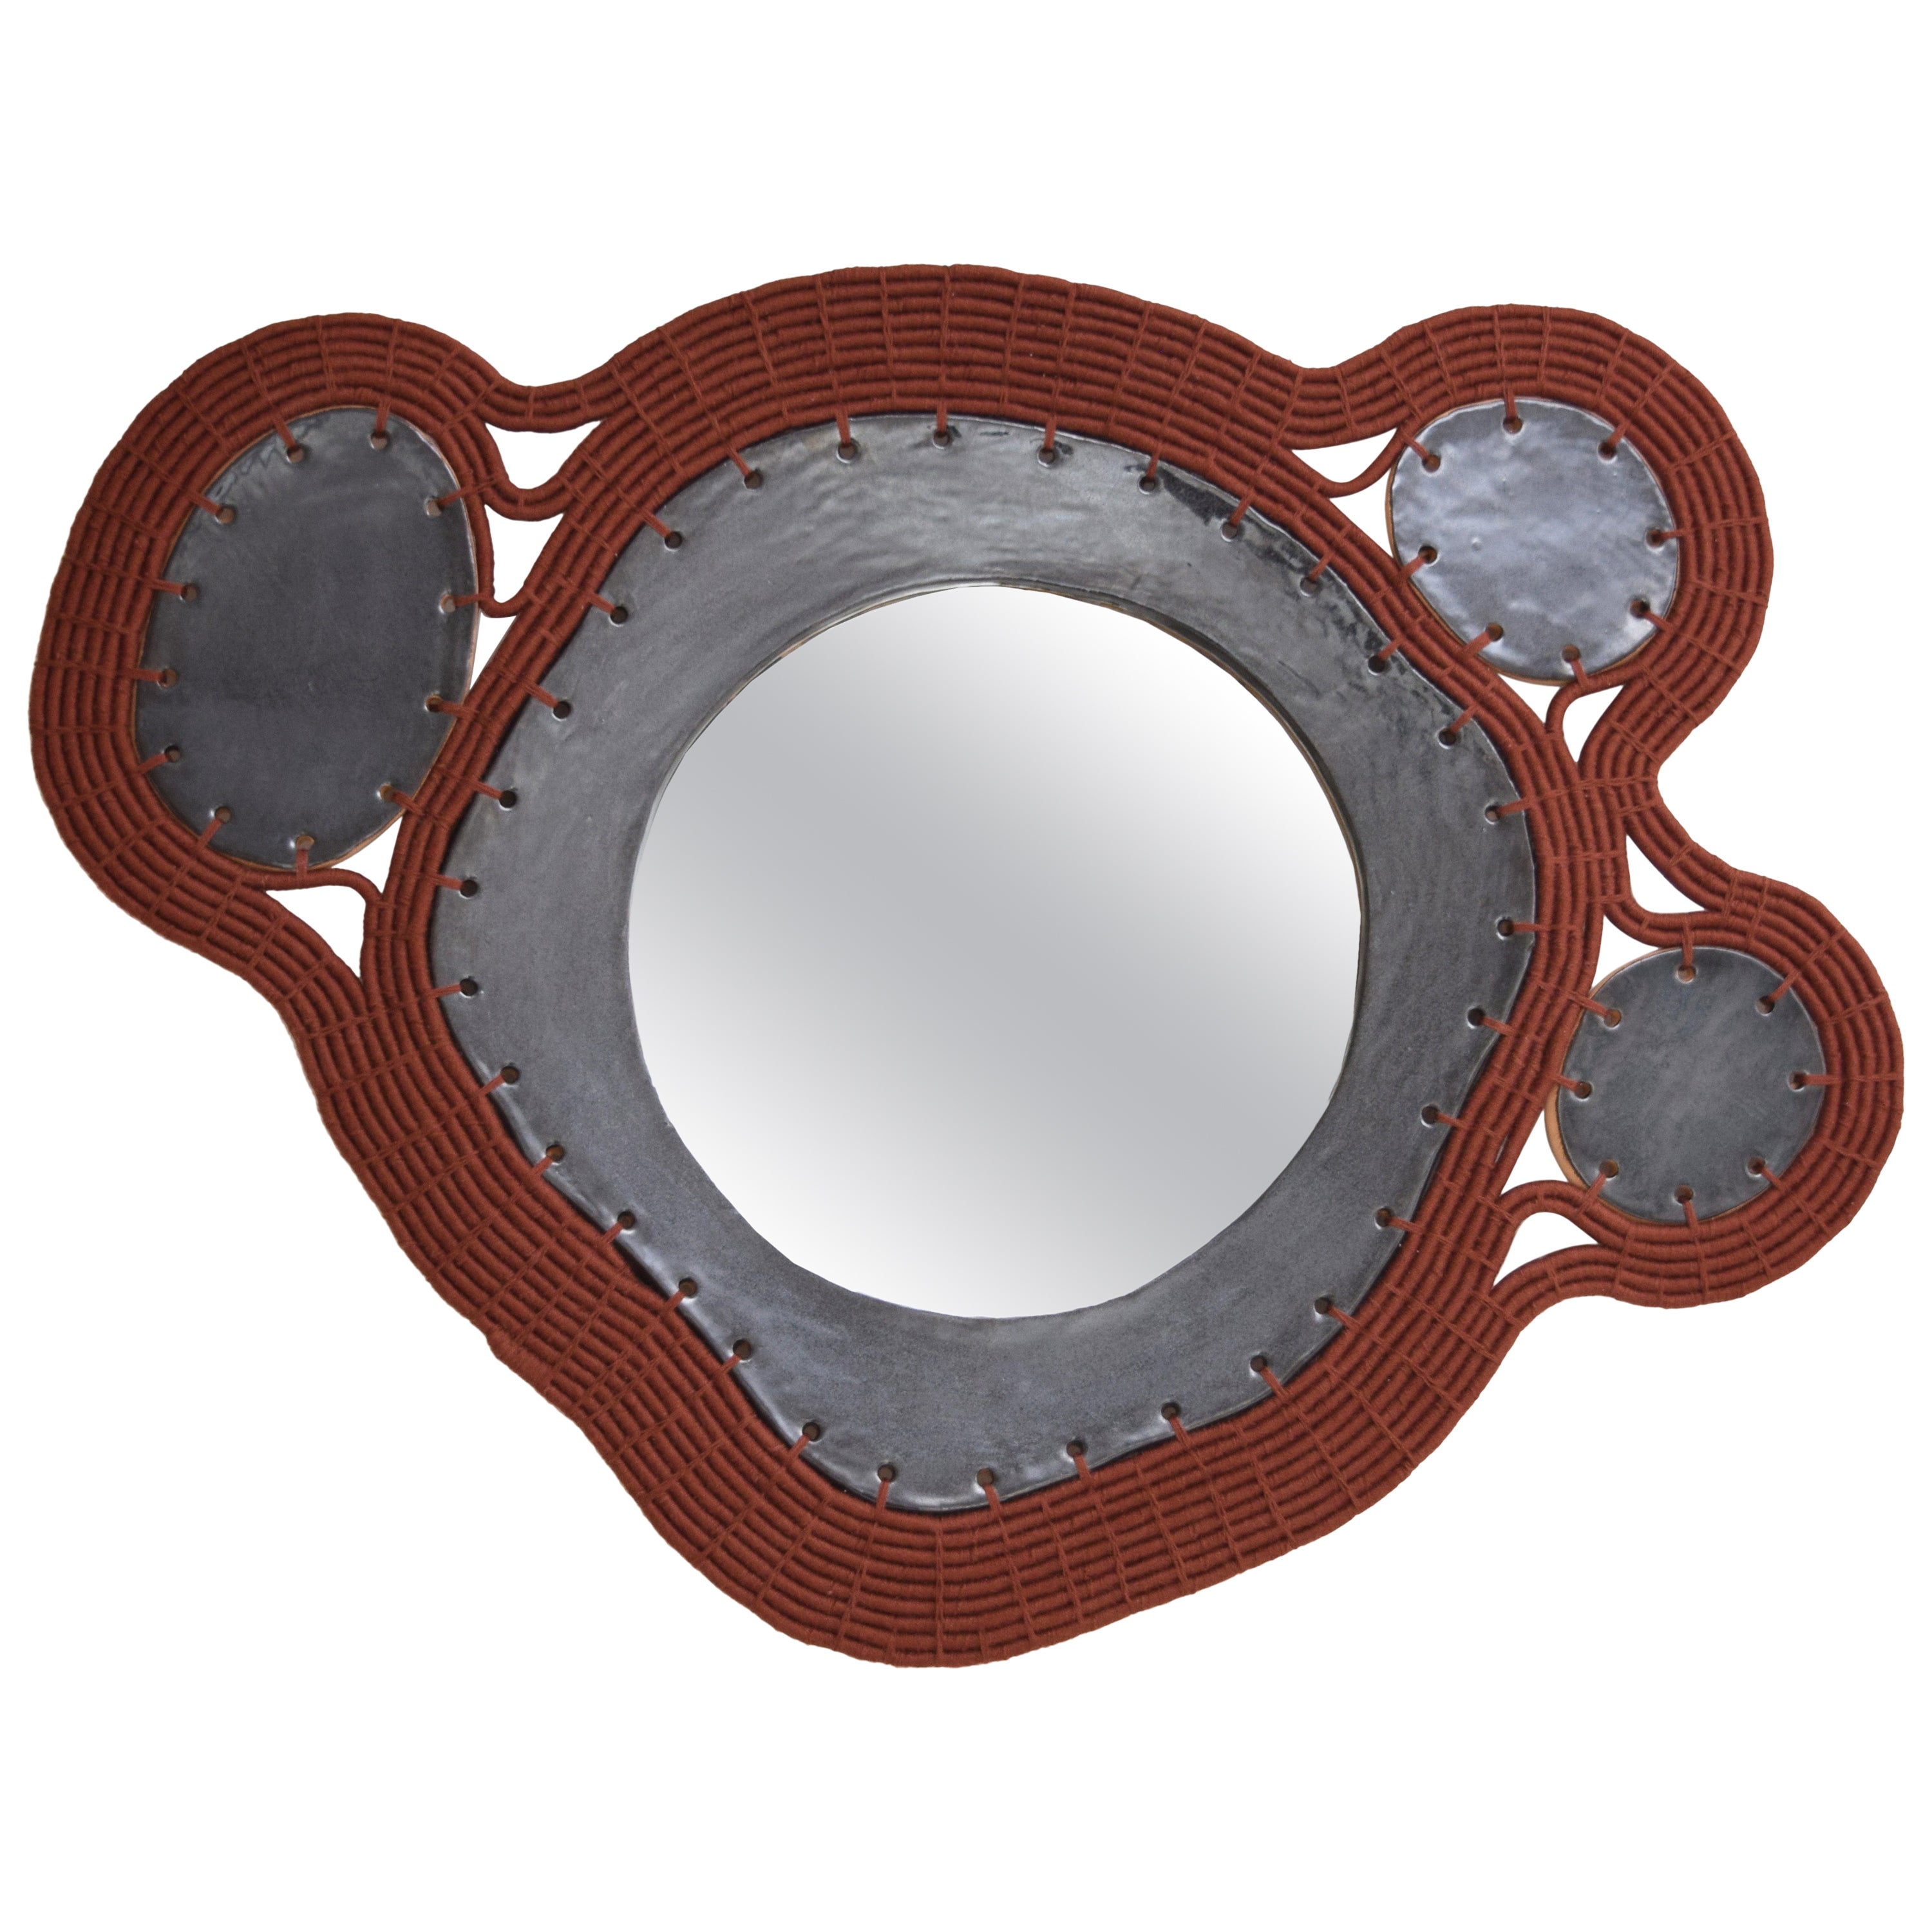 One of a Kind Handmade Mirror #794, Woven Rusty Cotton & Black Glazed Ceramic